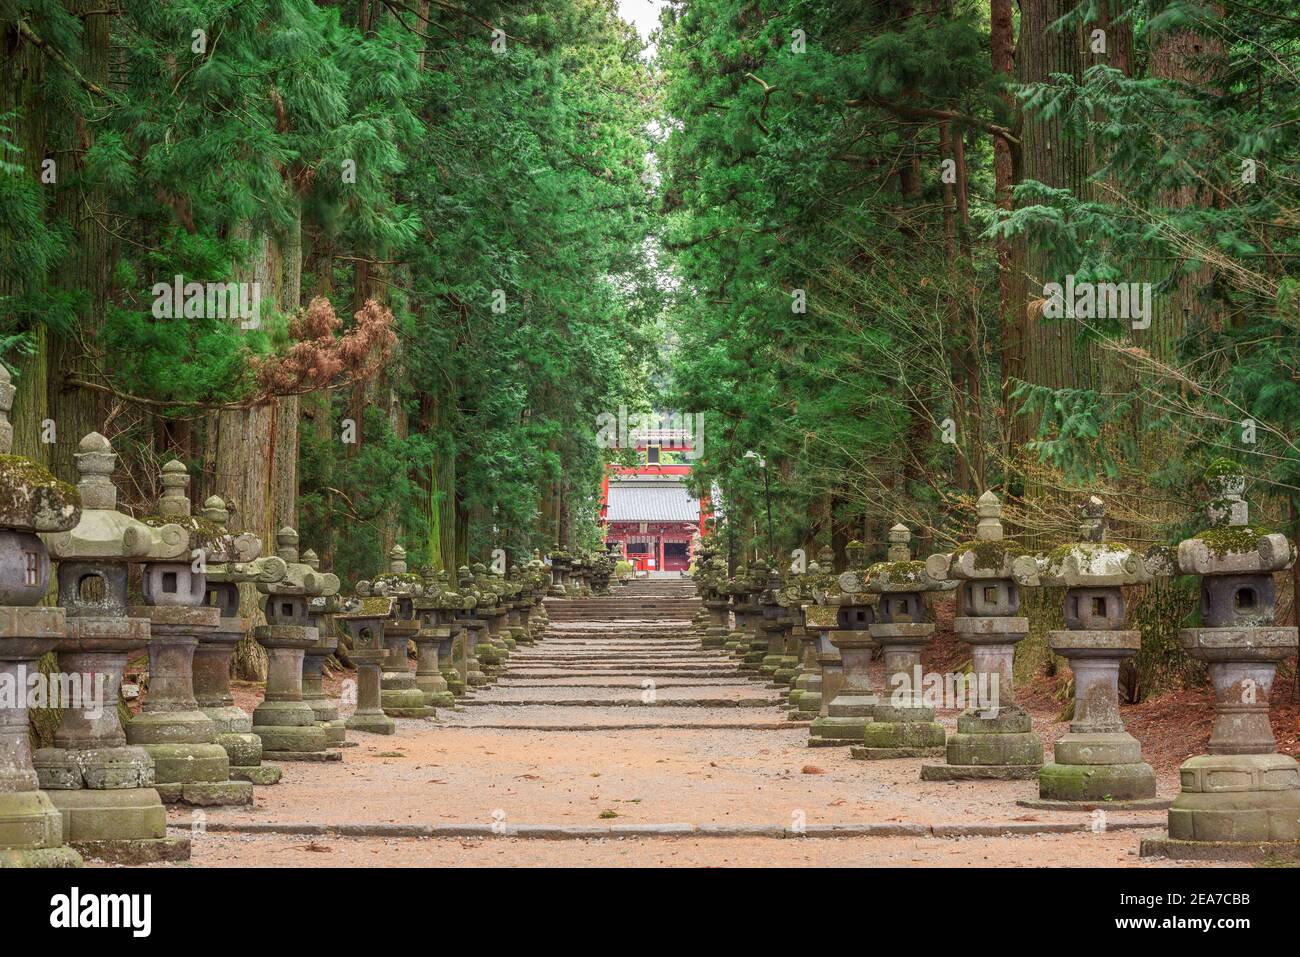 Tree lined entrance to Fujiyoshida Sengen Shrine in Fujiyoshida, Shizuoka, Japan. Stock Photo